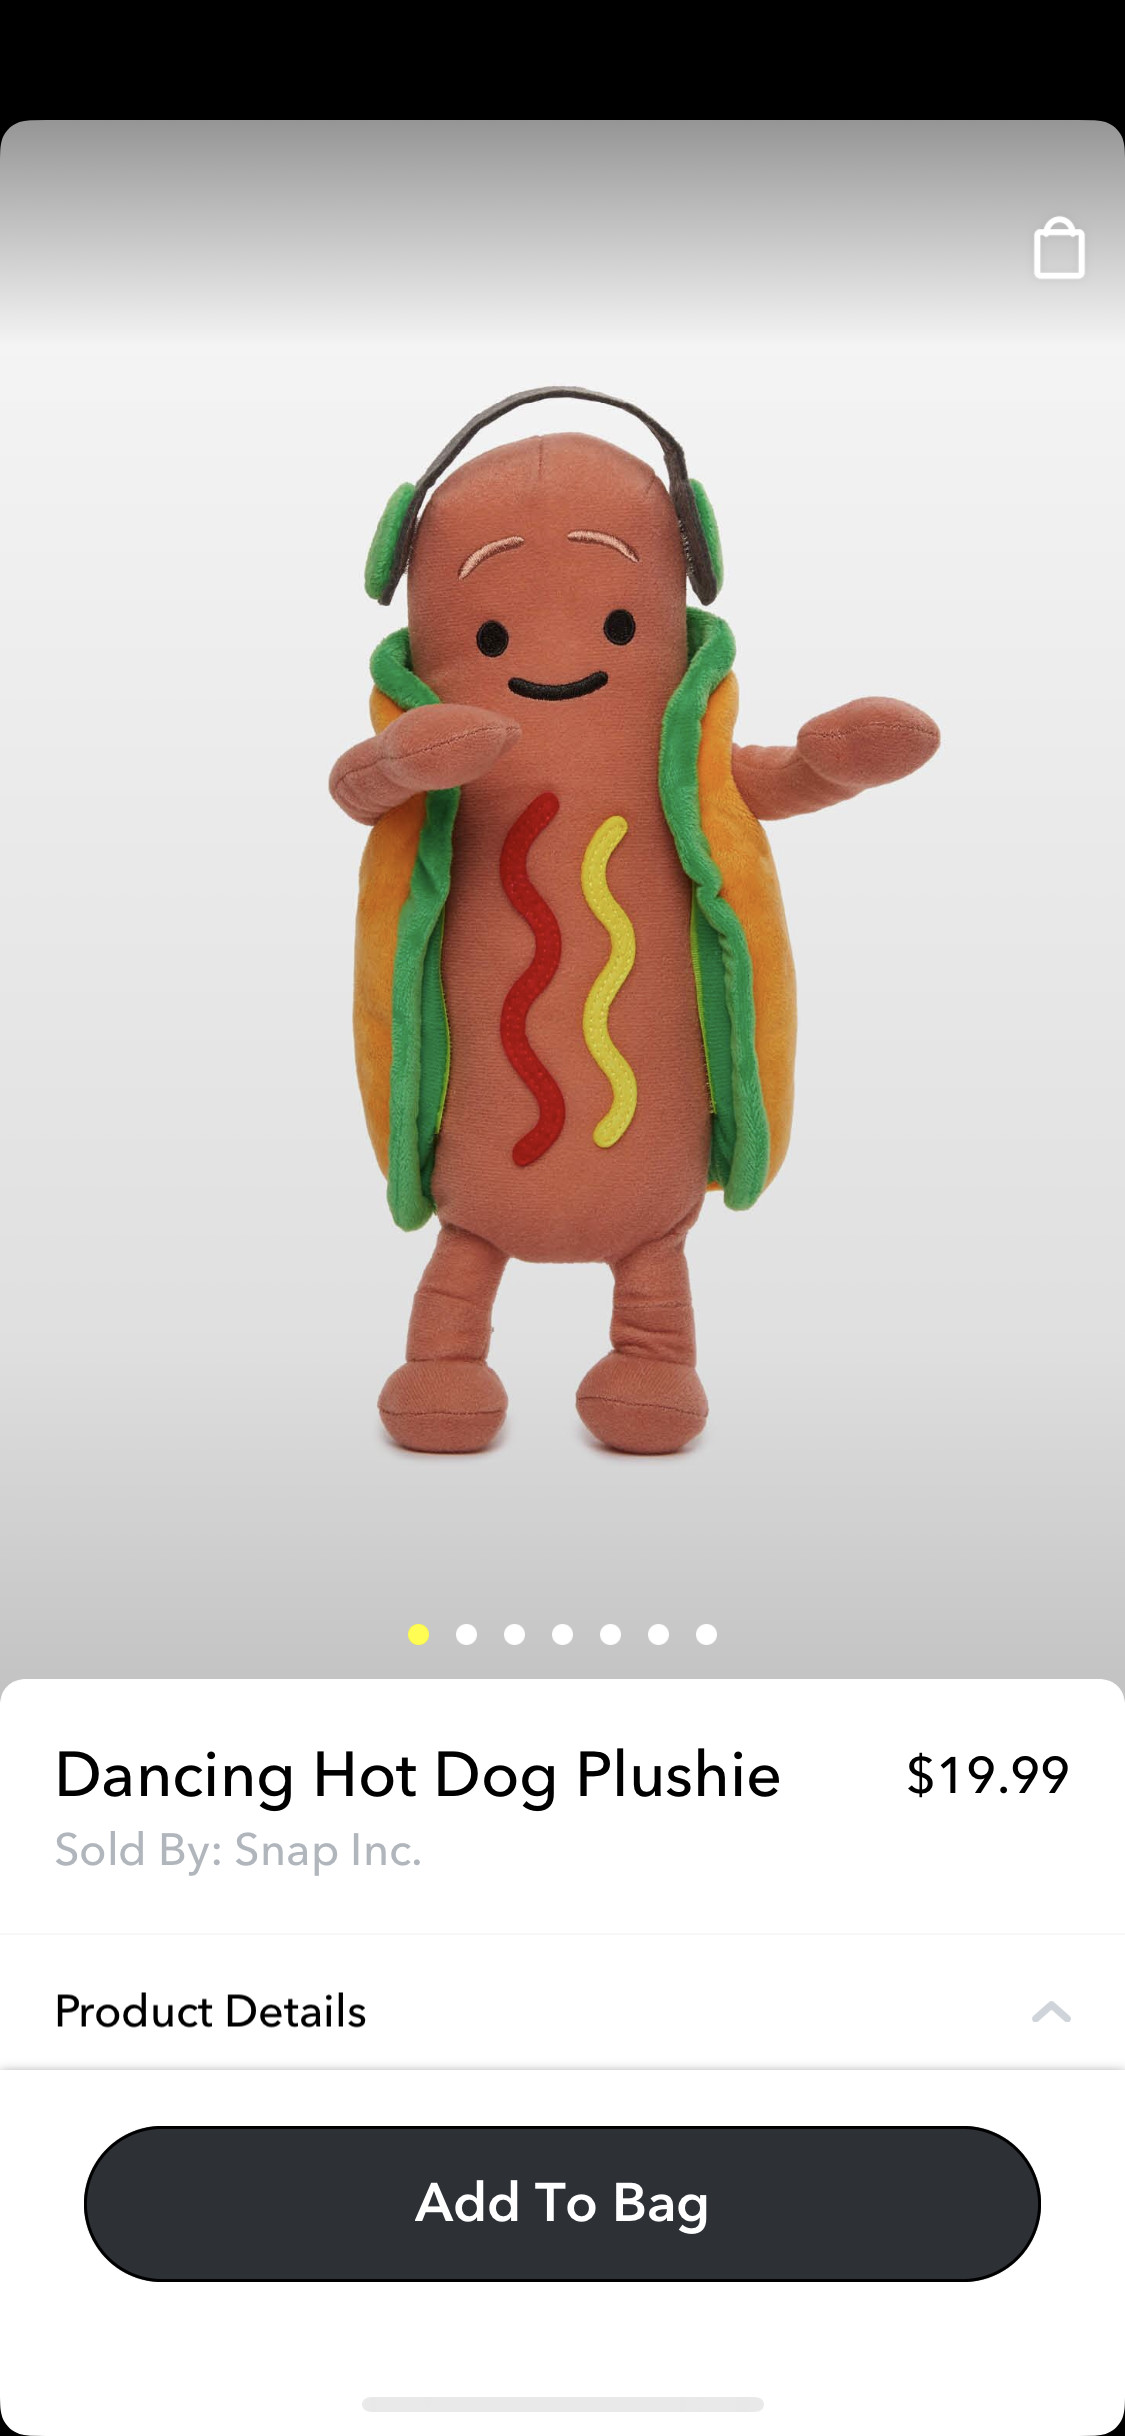 Snapchat’s dancing hotdog